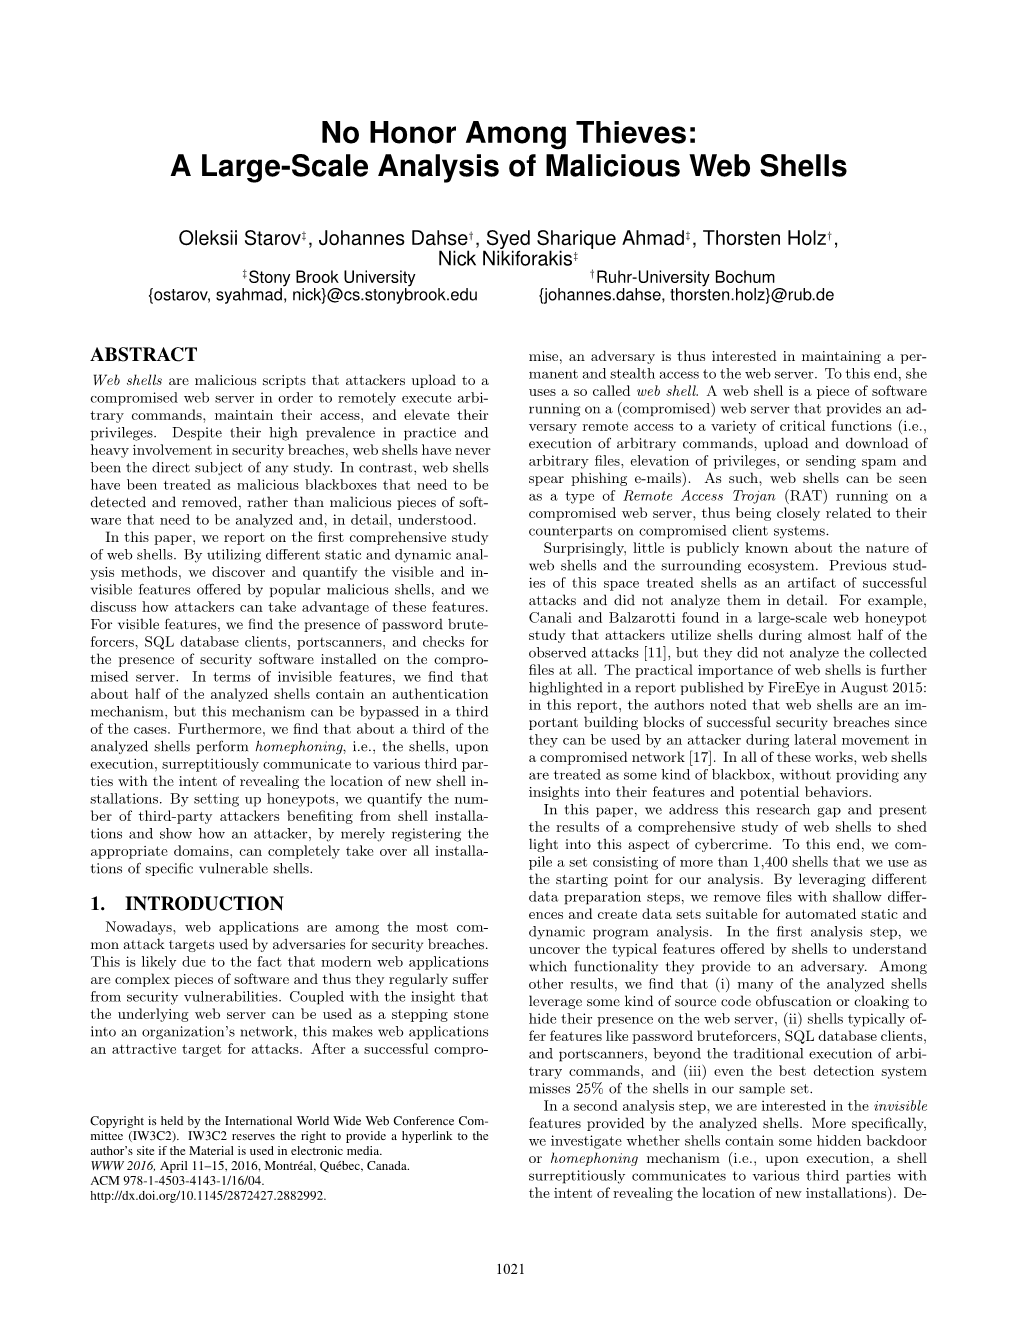 A Large-Scale Analysis of Malicious Web Shells